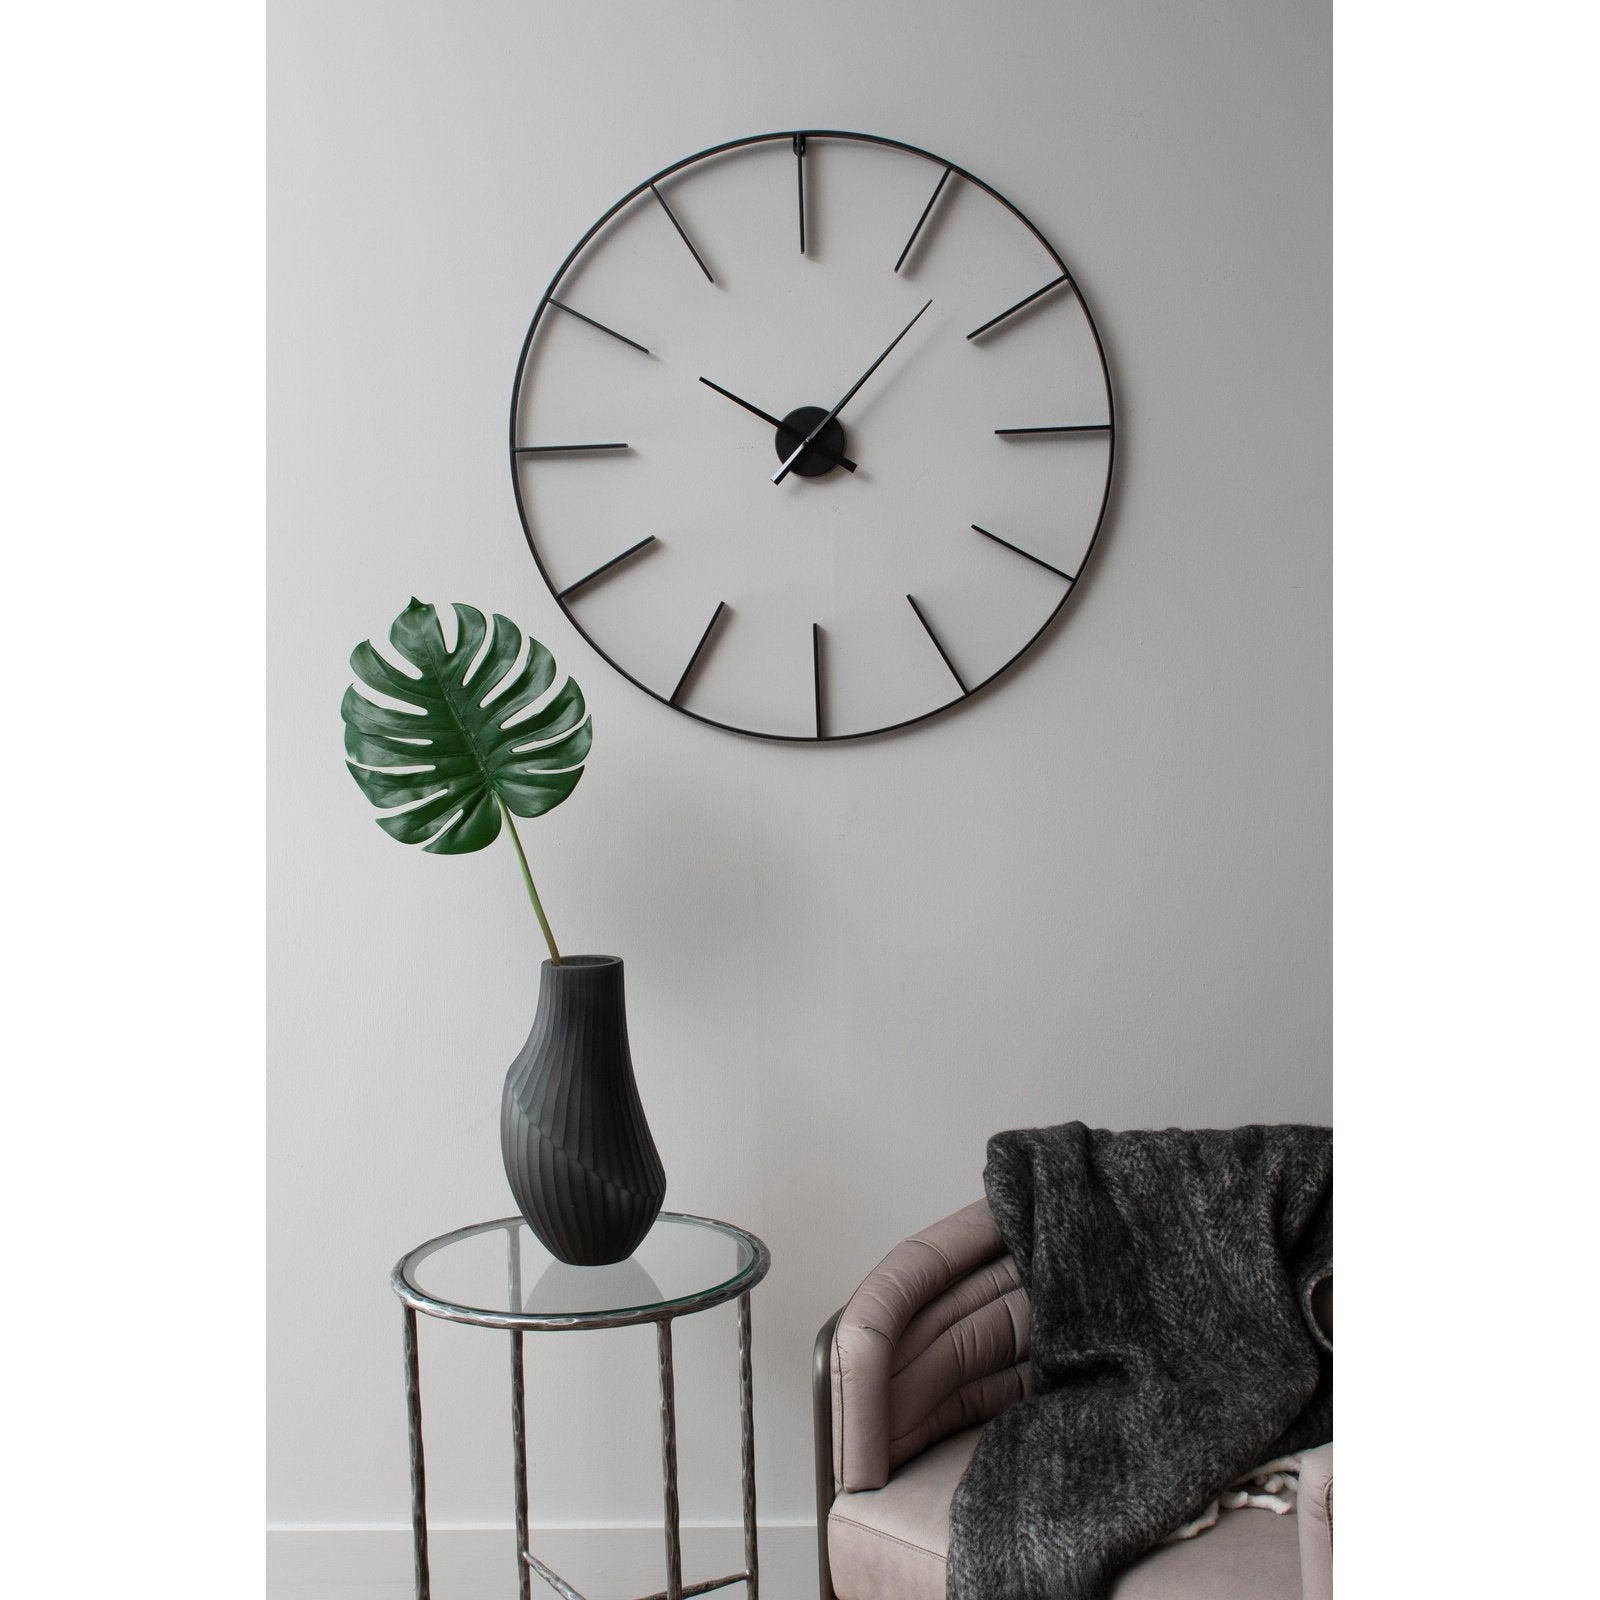 Tiverley Black Skeleton Wall Clock 80cm diameter